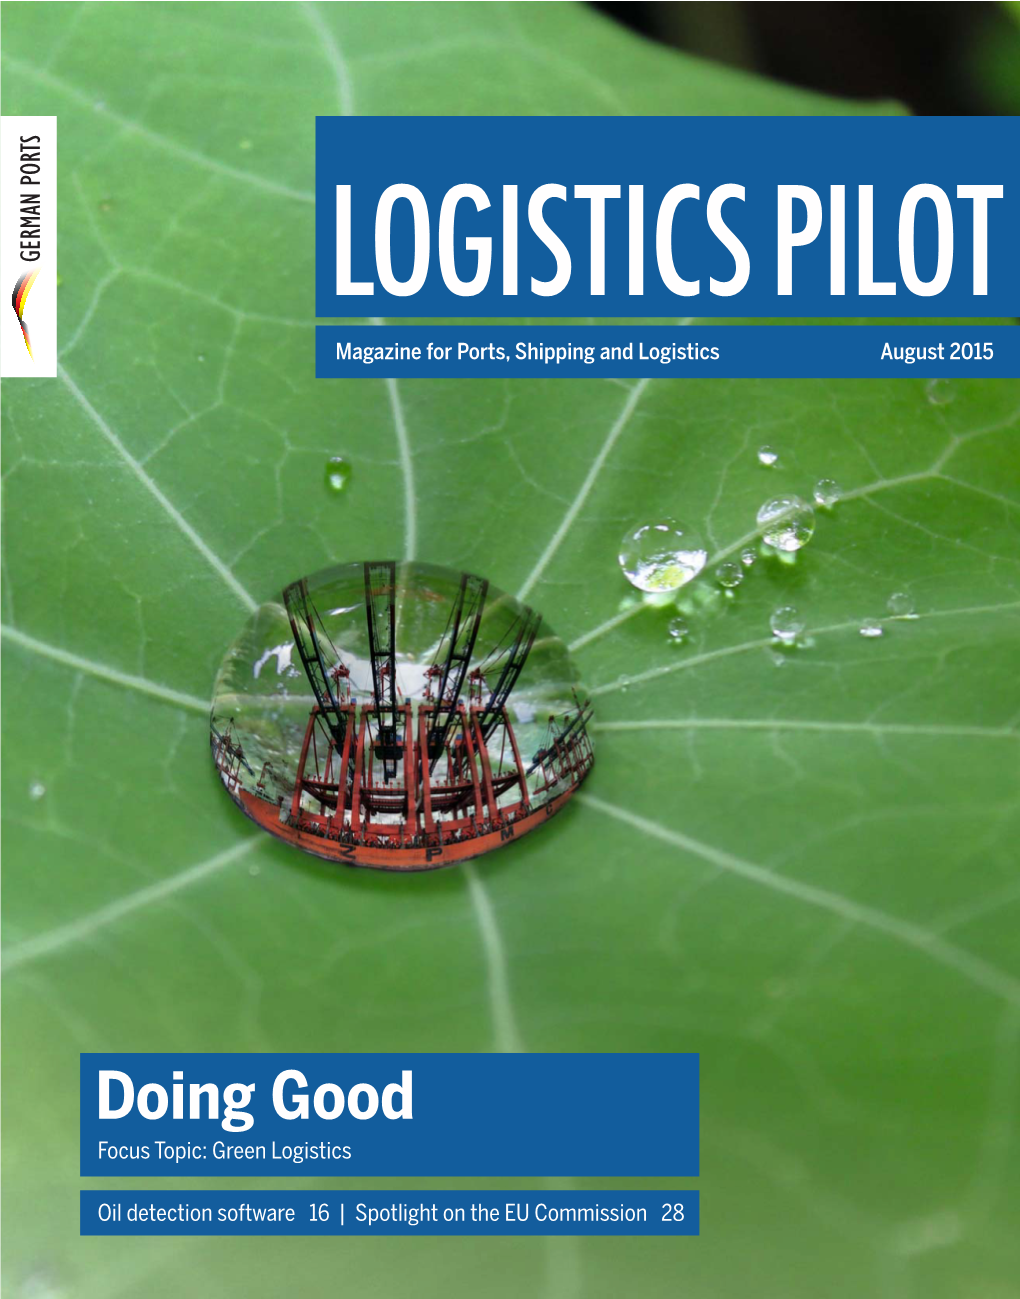 Doing Good Focus Topic: Green Logistics